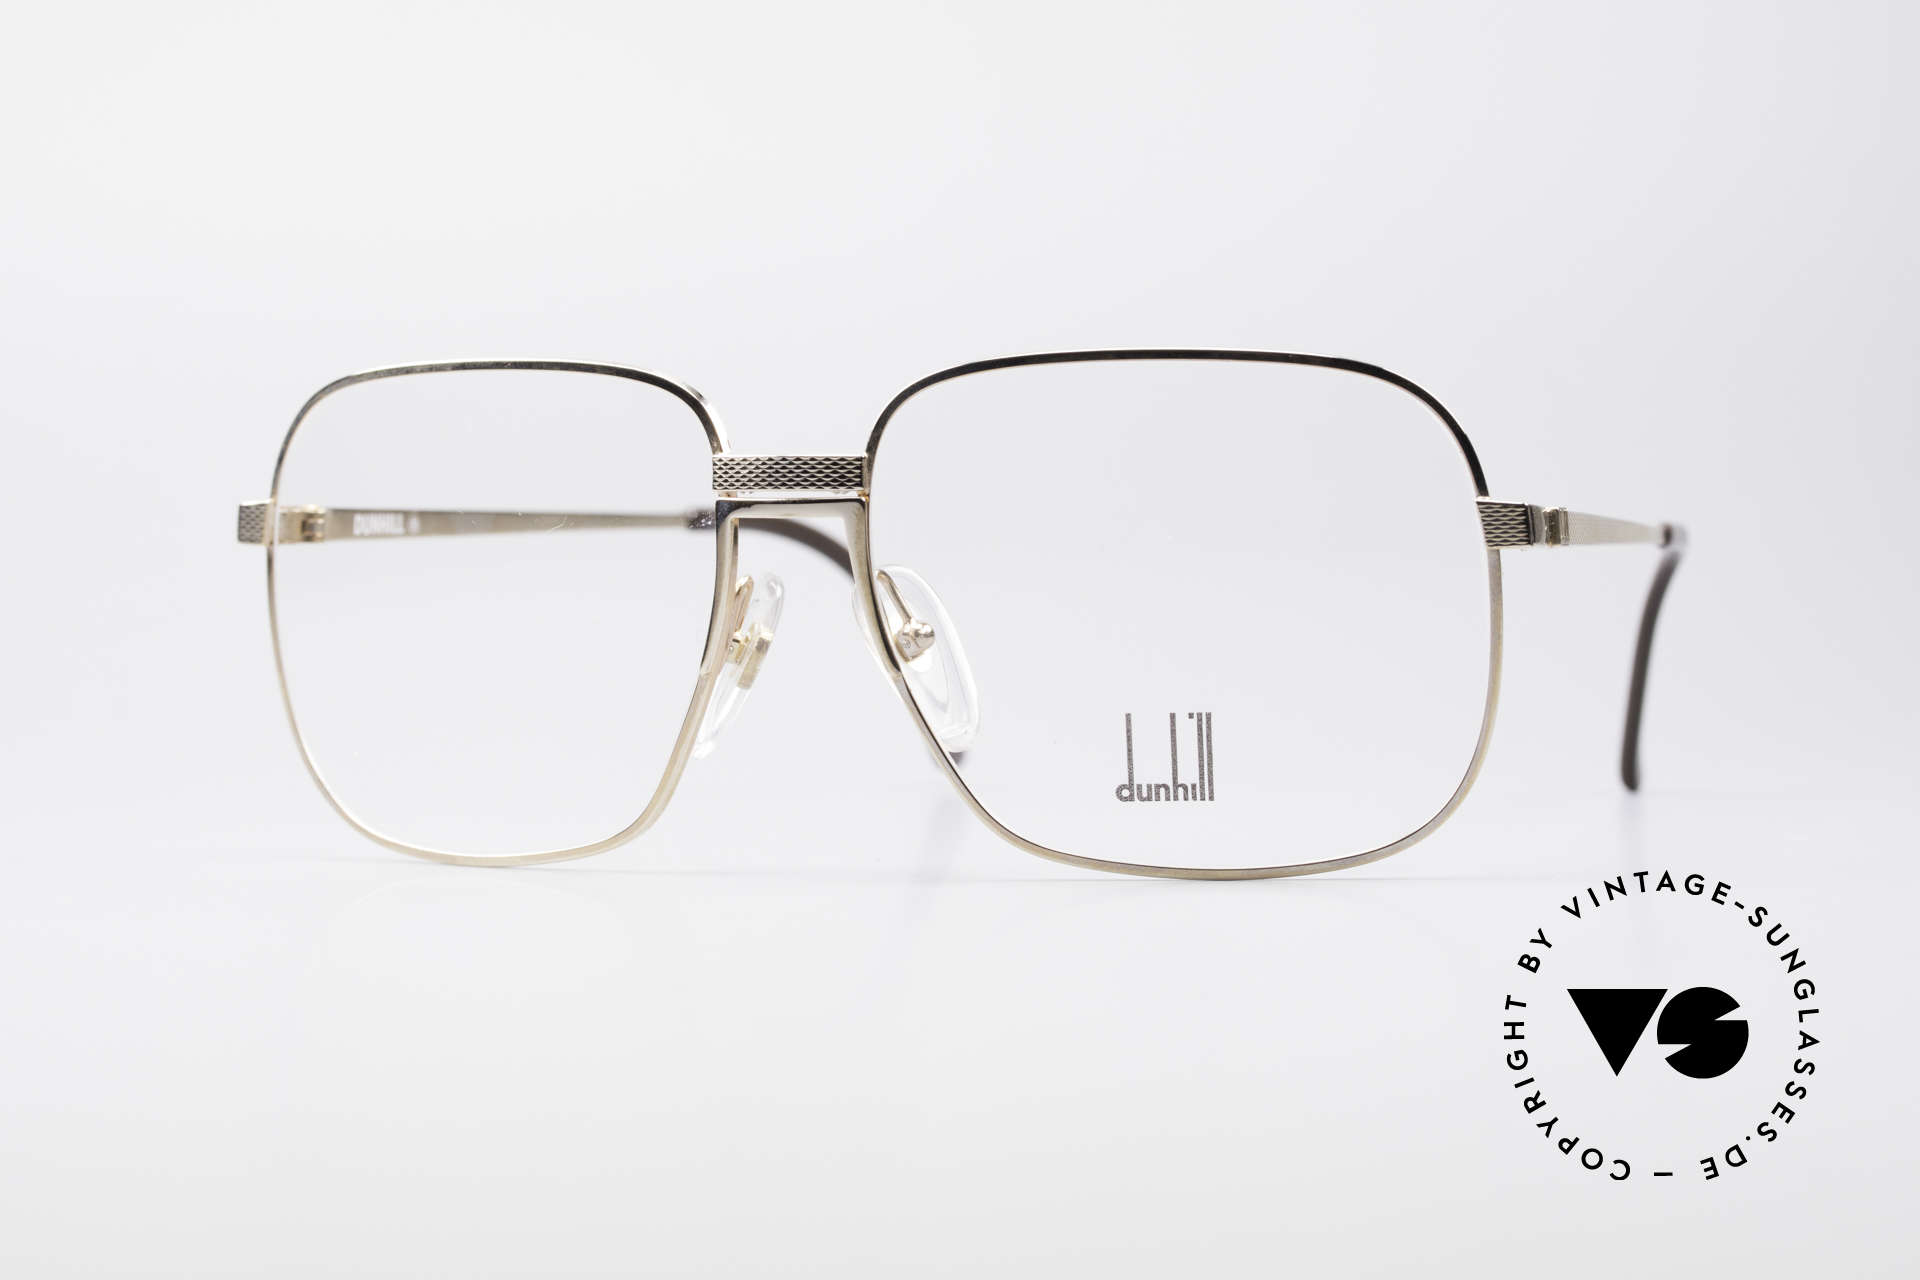 Dunhill 6090 Gold Plated 90's Eyeglasses, noble DUNHILL vintage 90's eyeglasses for gentlemen, Made for Men